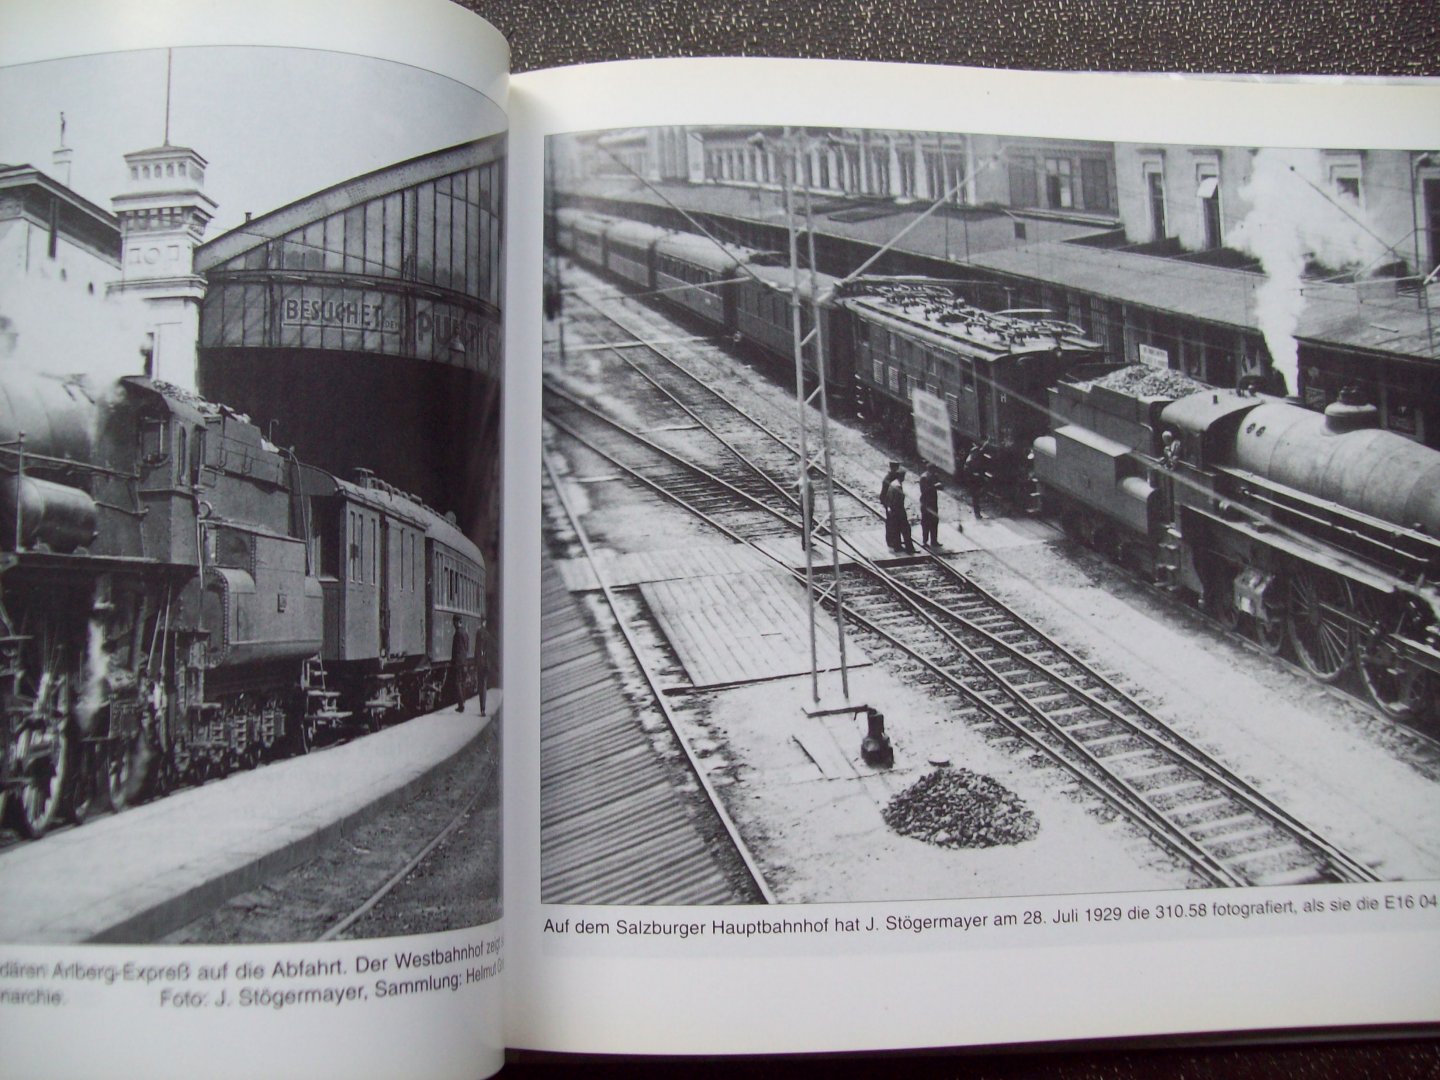 Roland Alber & Wolfgang Kaiser - "Die Dampflokomotive 310.23"